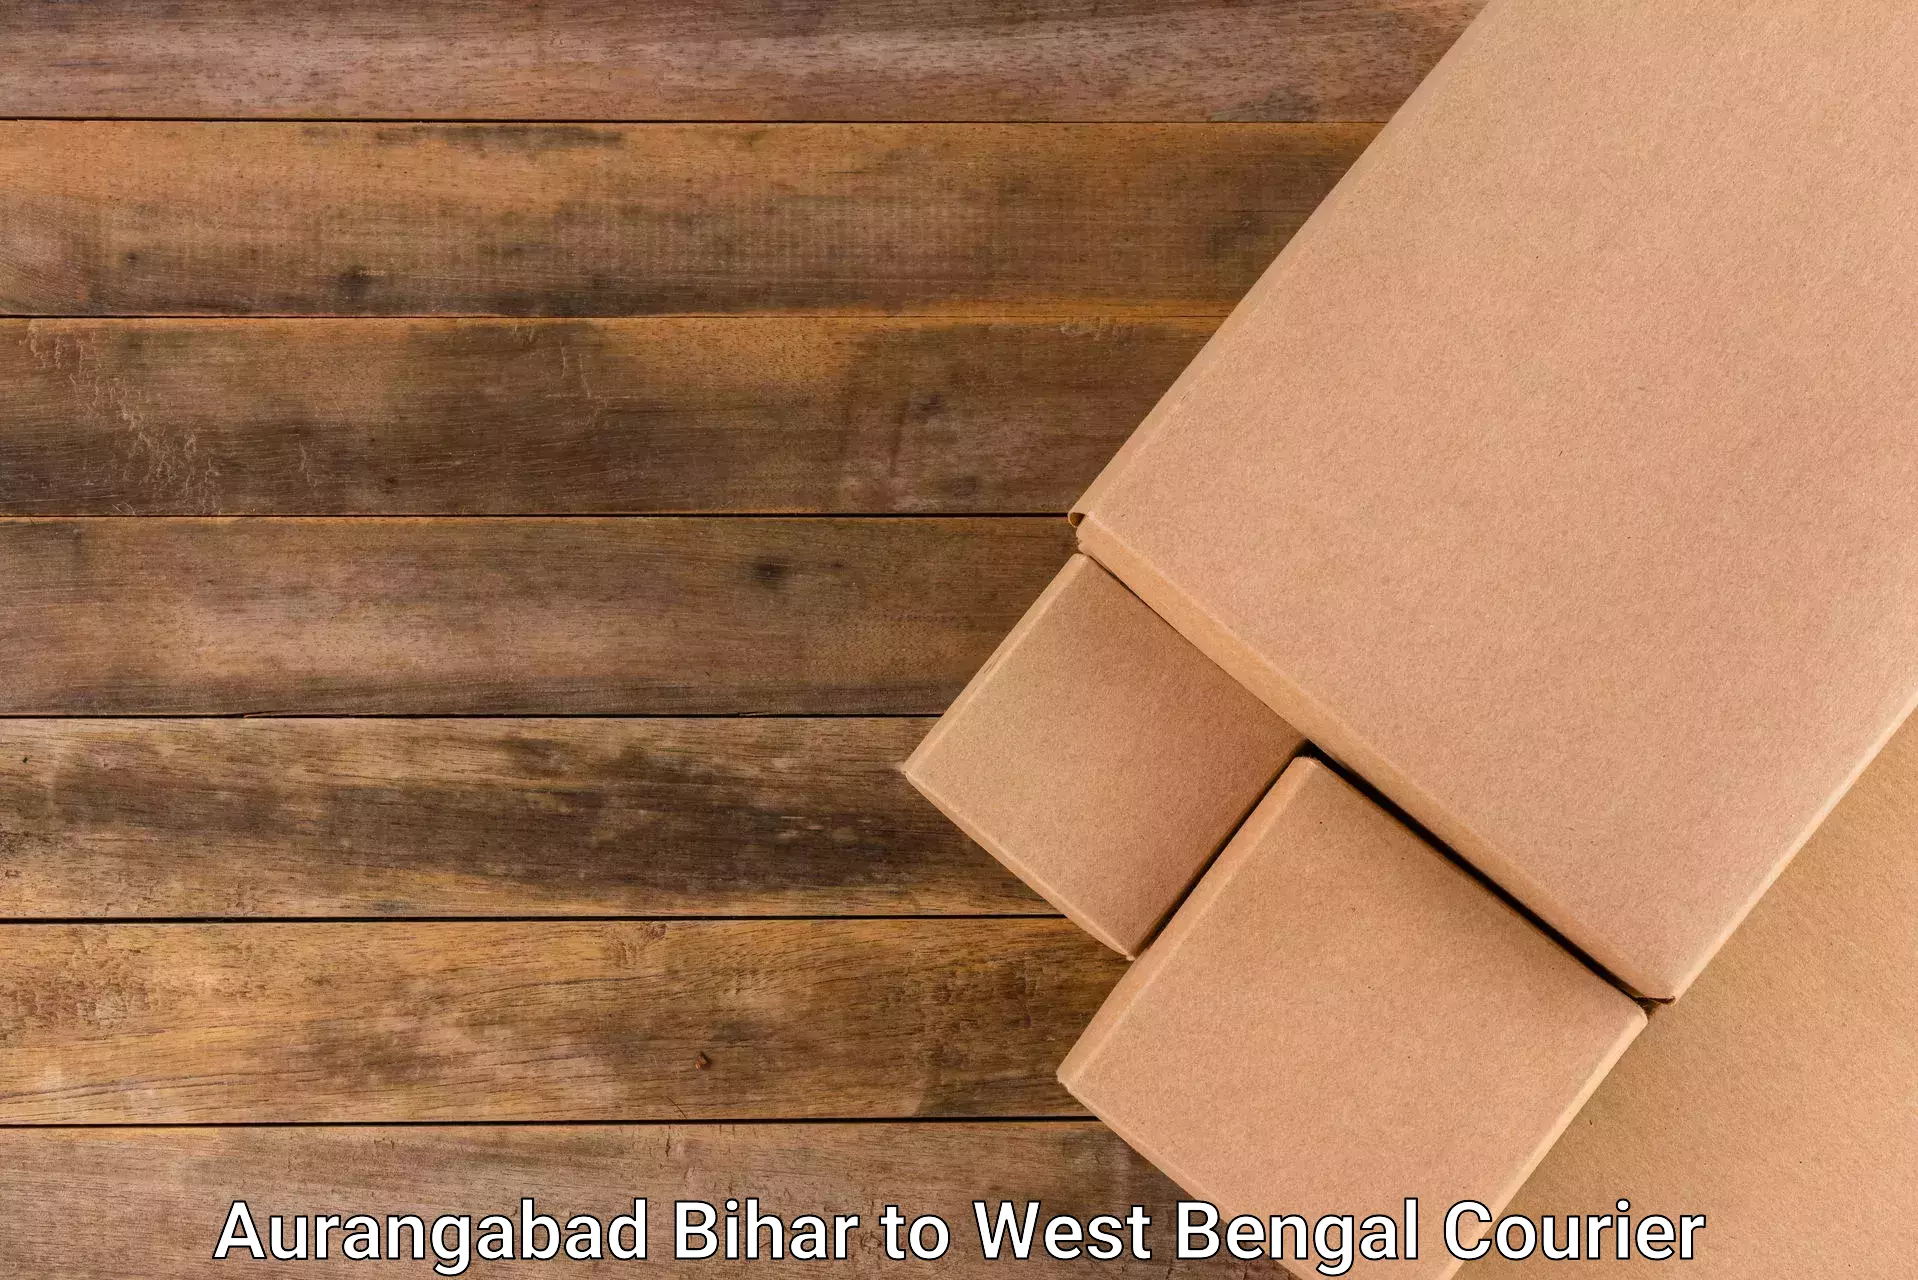 Reliable delivery network Aurangabad Bihar to Morgram